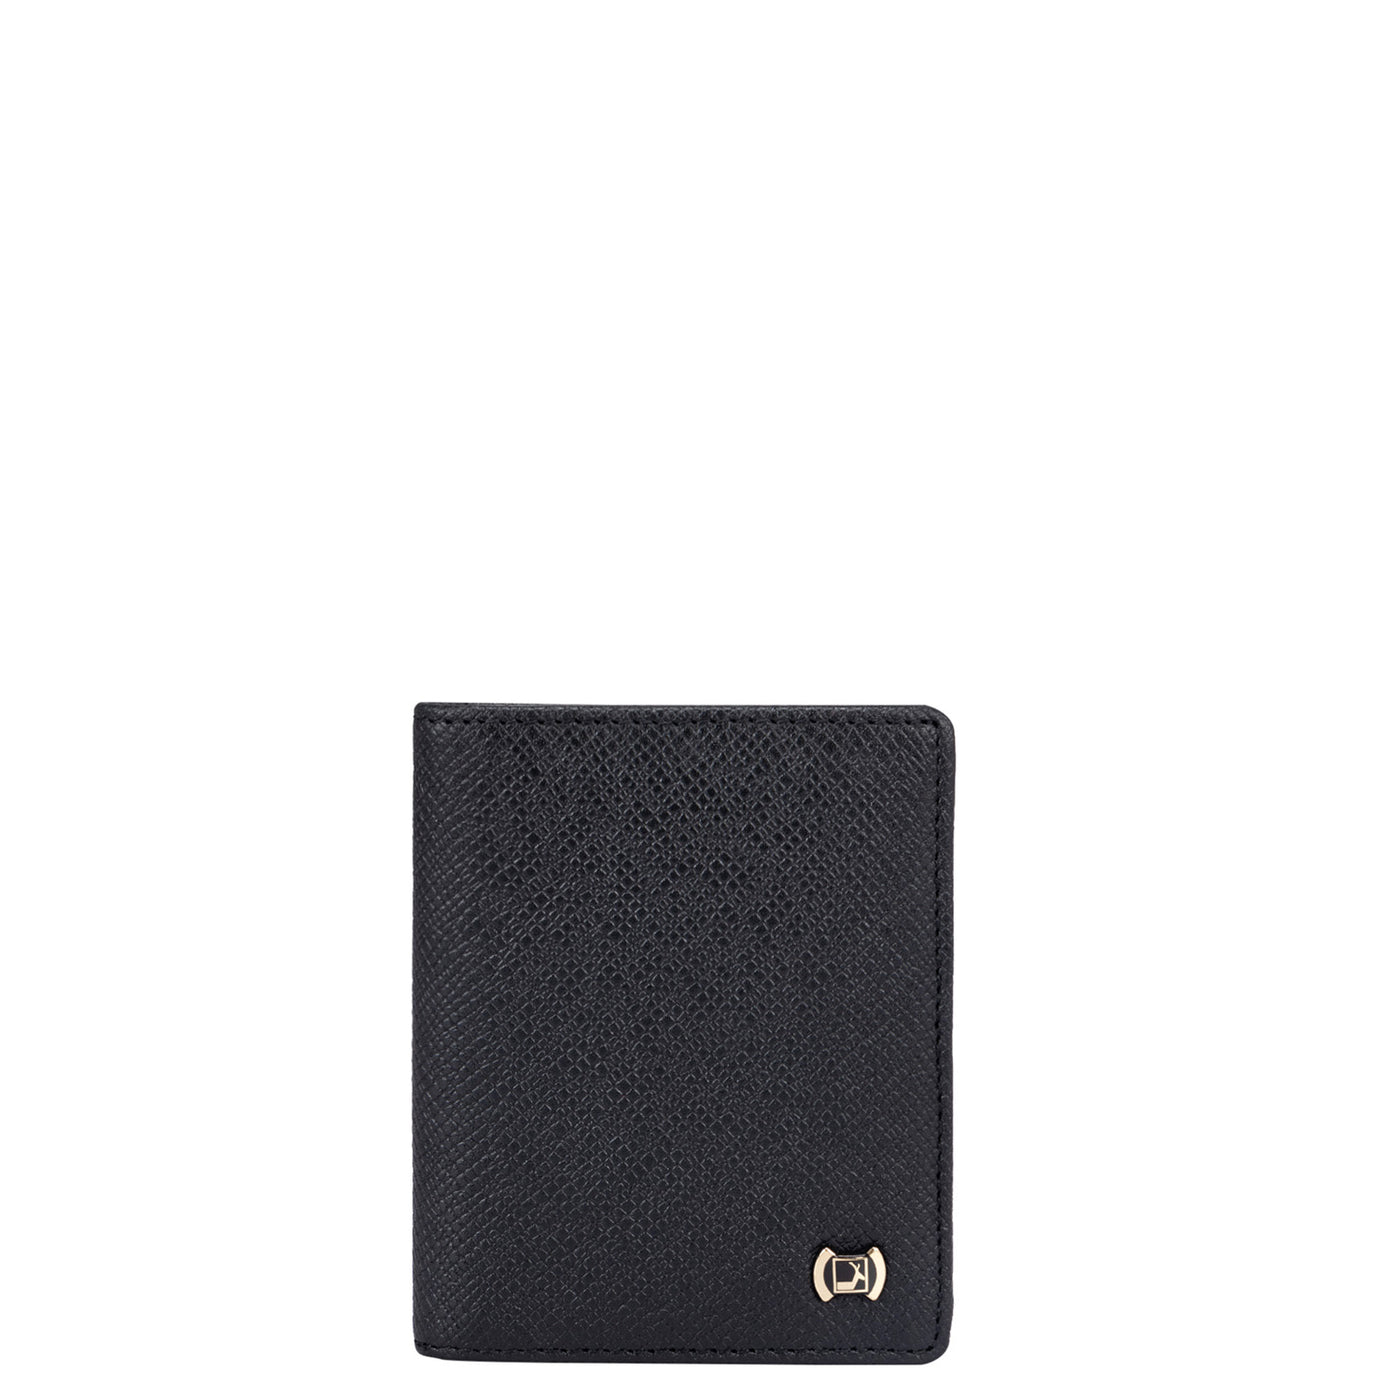 Franzy Leather Card Case - Black